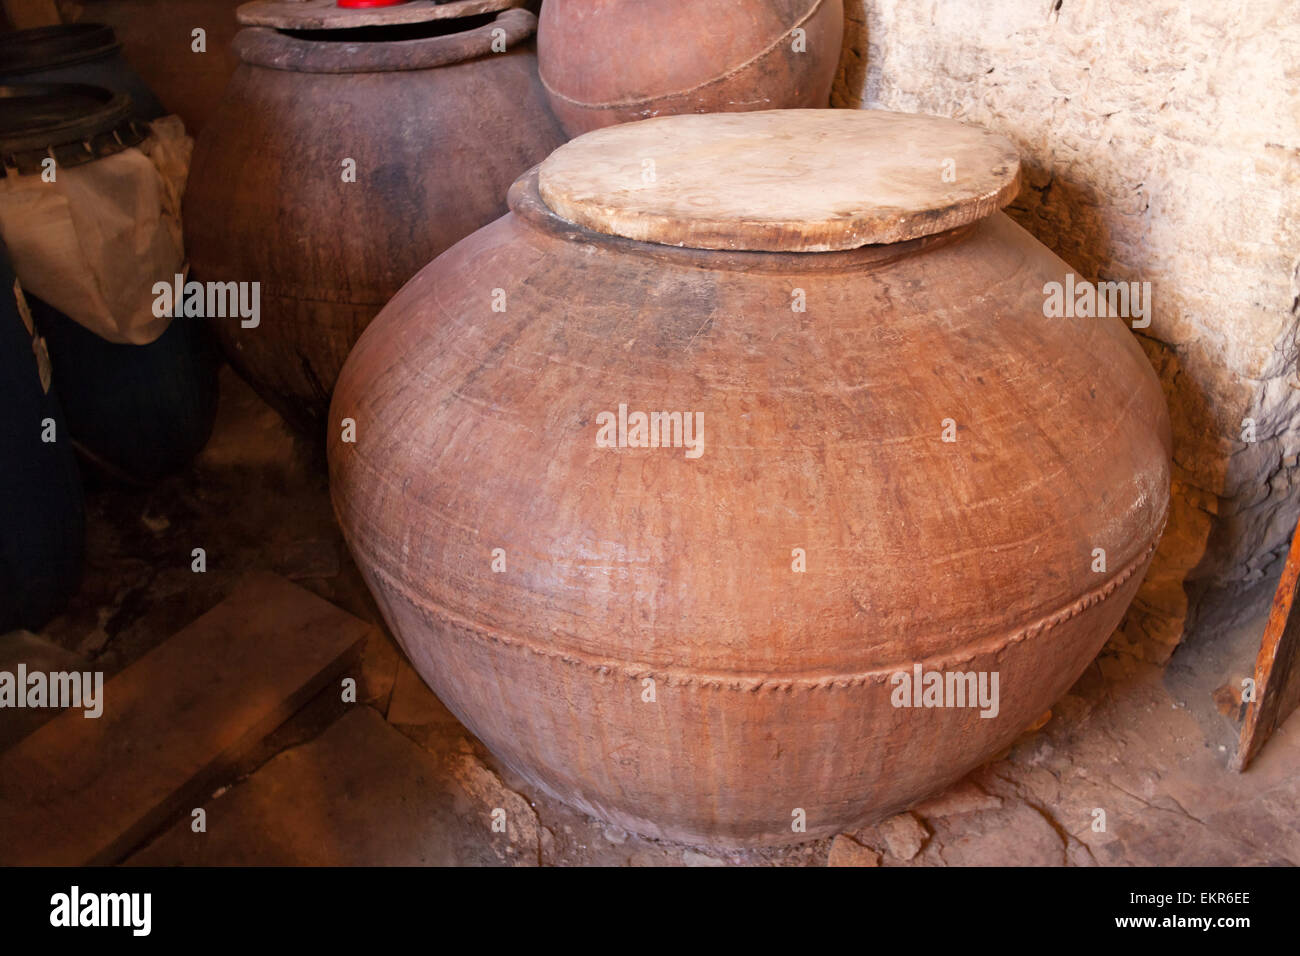 Jar in the village, Omodos, Republic of Cyprus Stock Photo